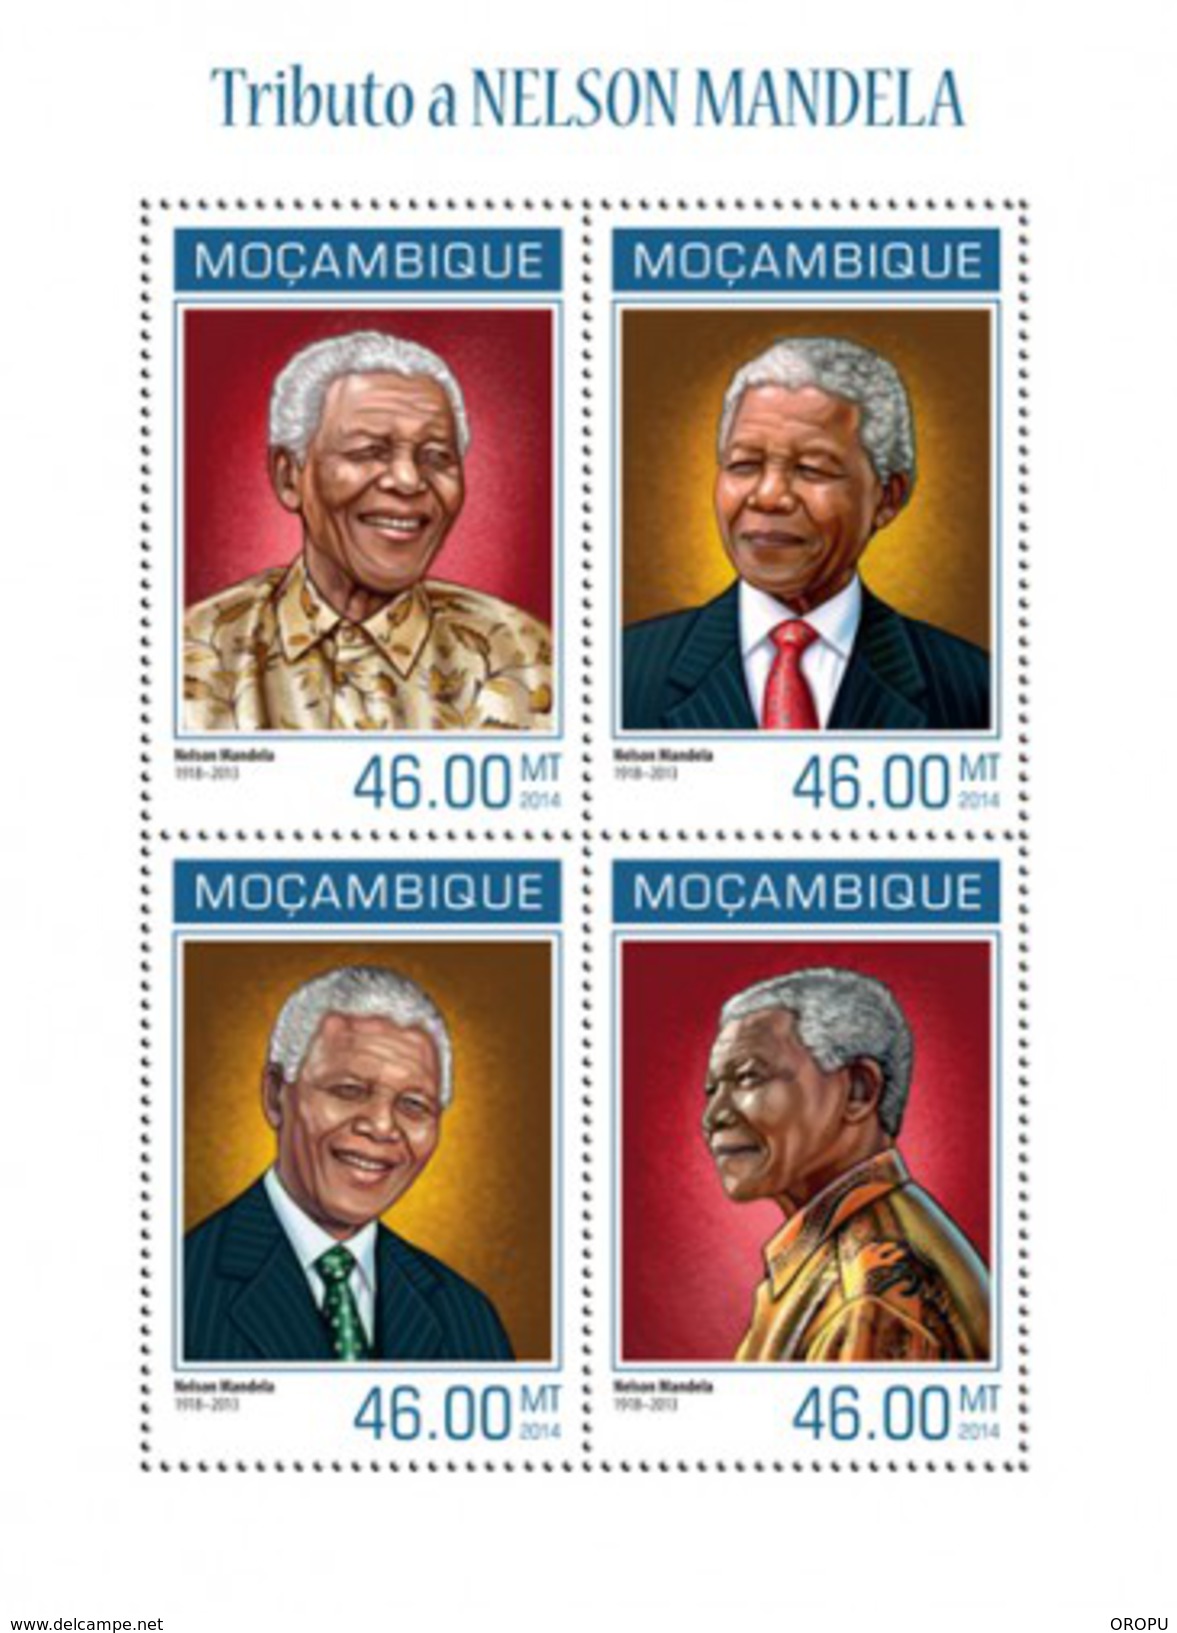 MOZAMBIQUE SHEET. TRIBUTO A NELSON MANDELA. HOMAGE TO NELSON MANDELA. 2014. PERFORADO NUEVO. - Mozambique